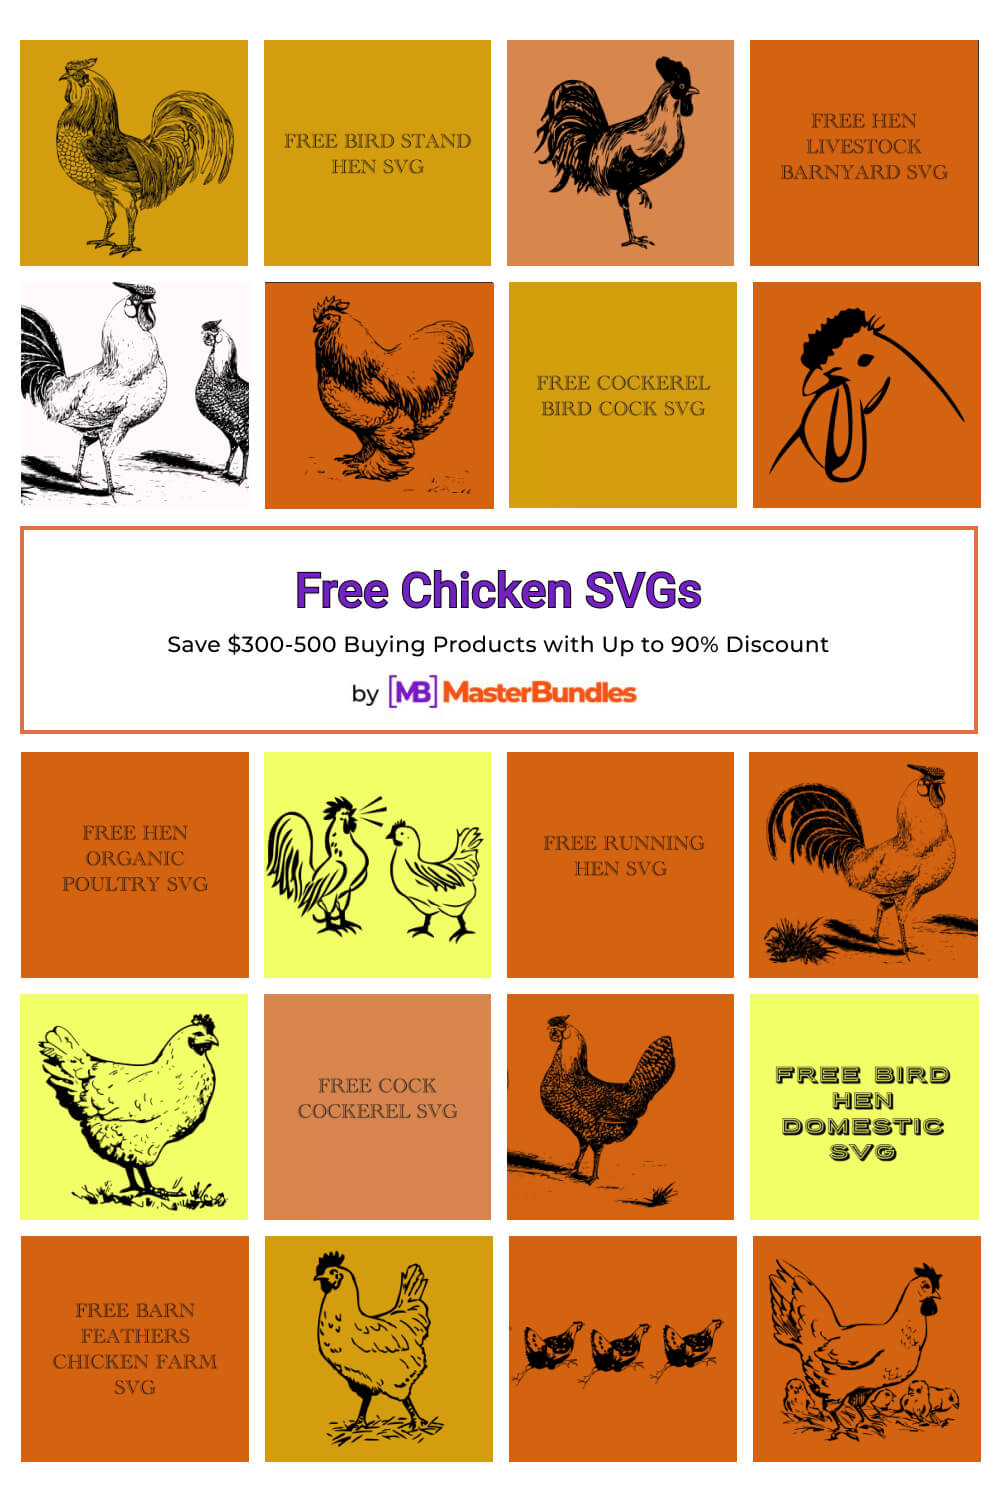 free chicken svgs pinterest image.